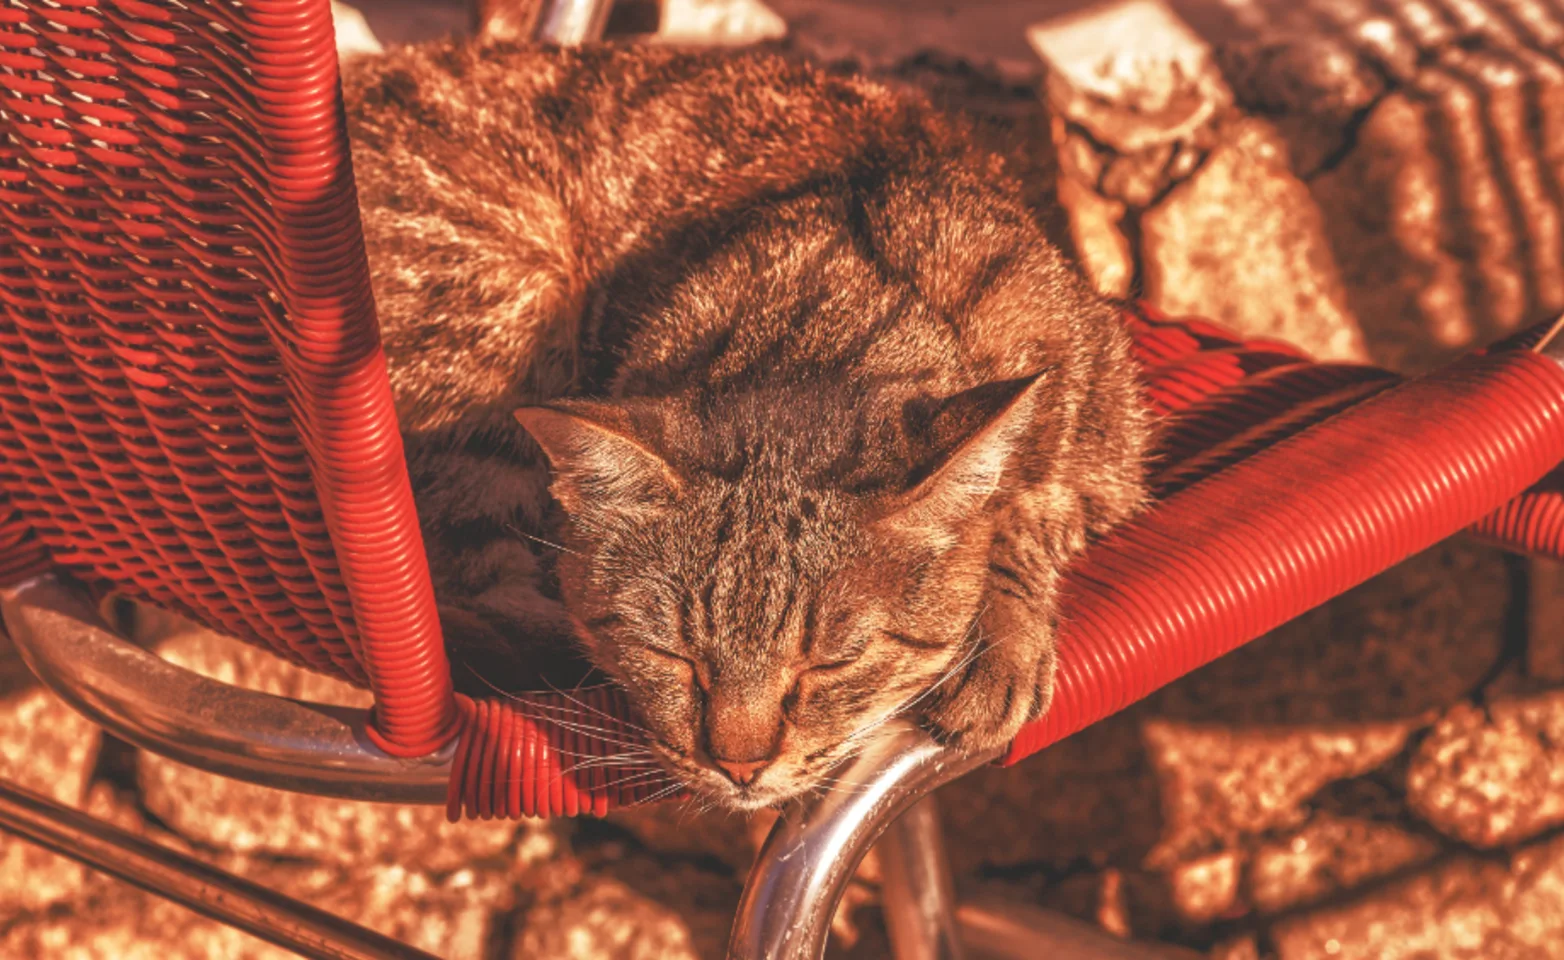 Cat laying in desert